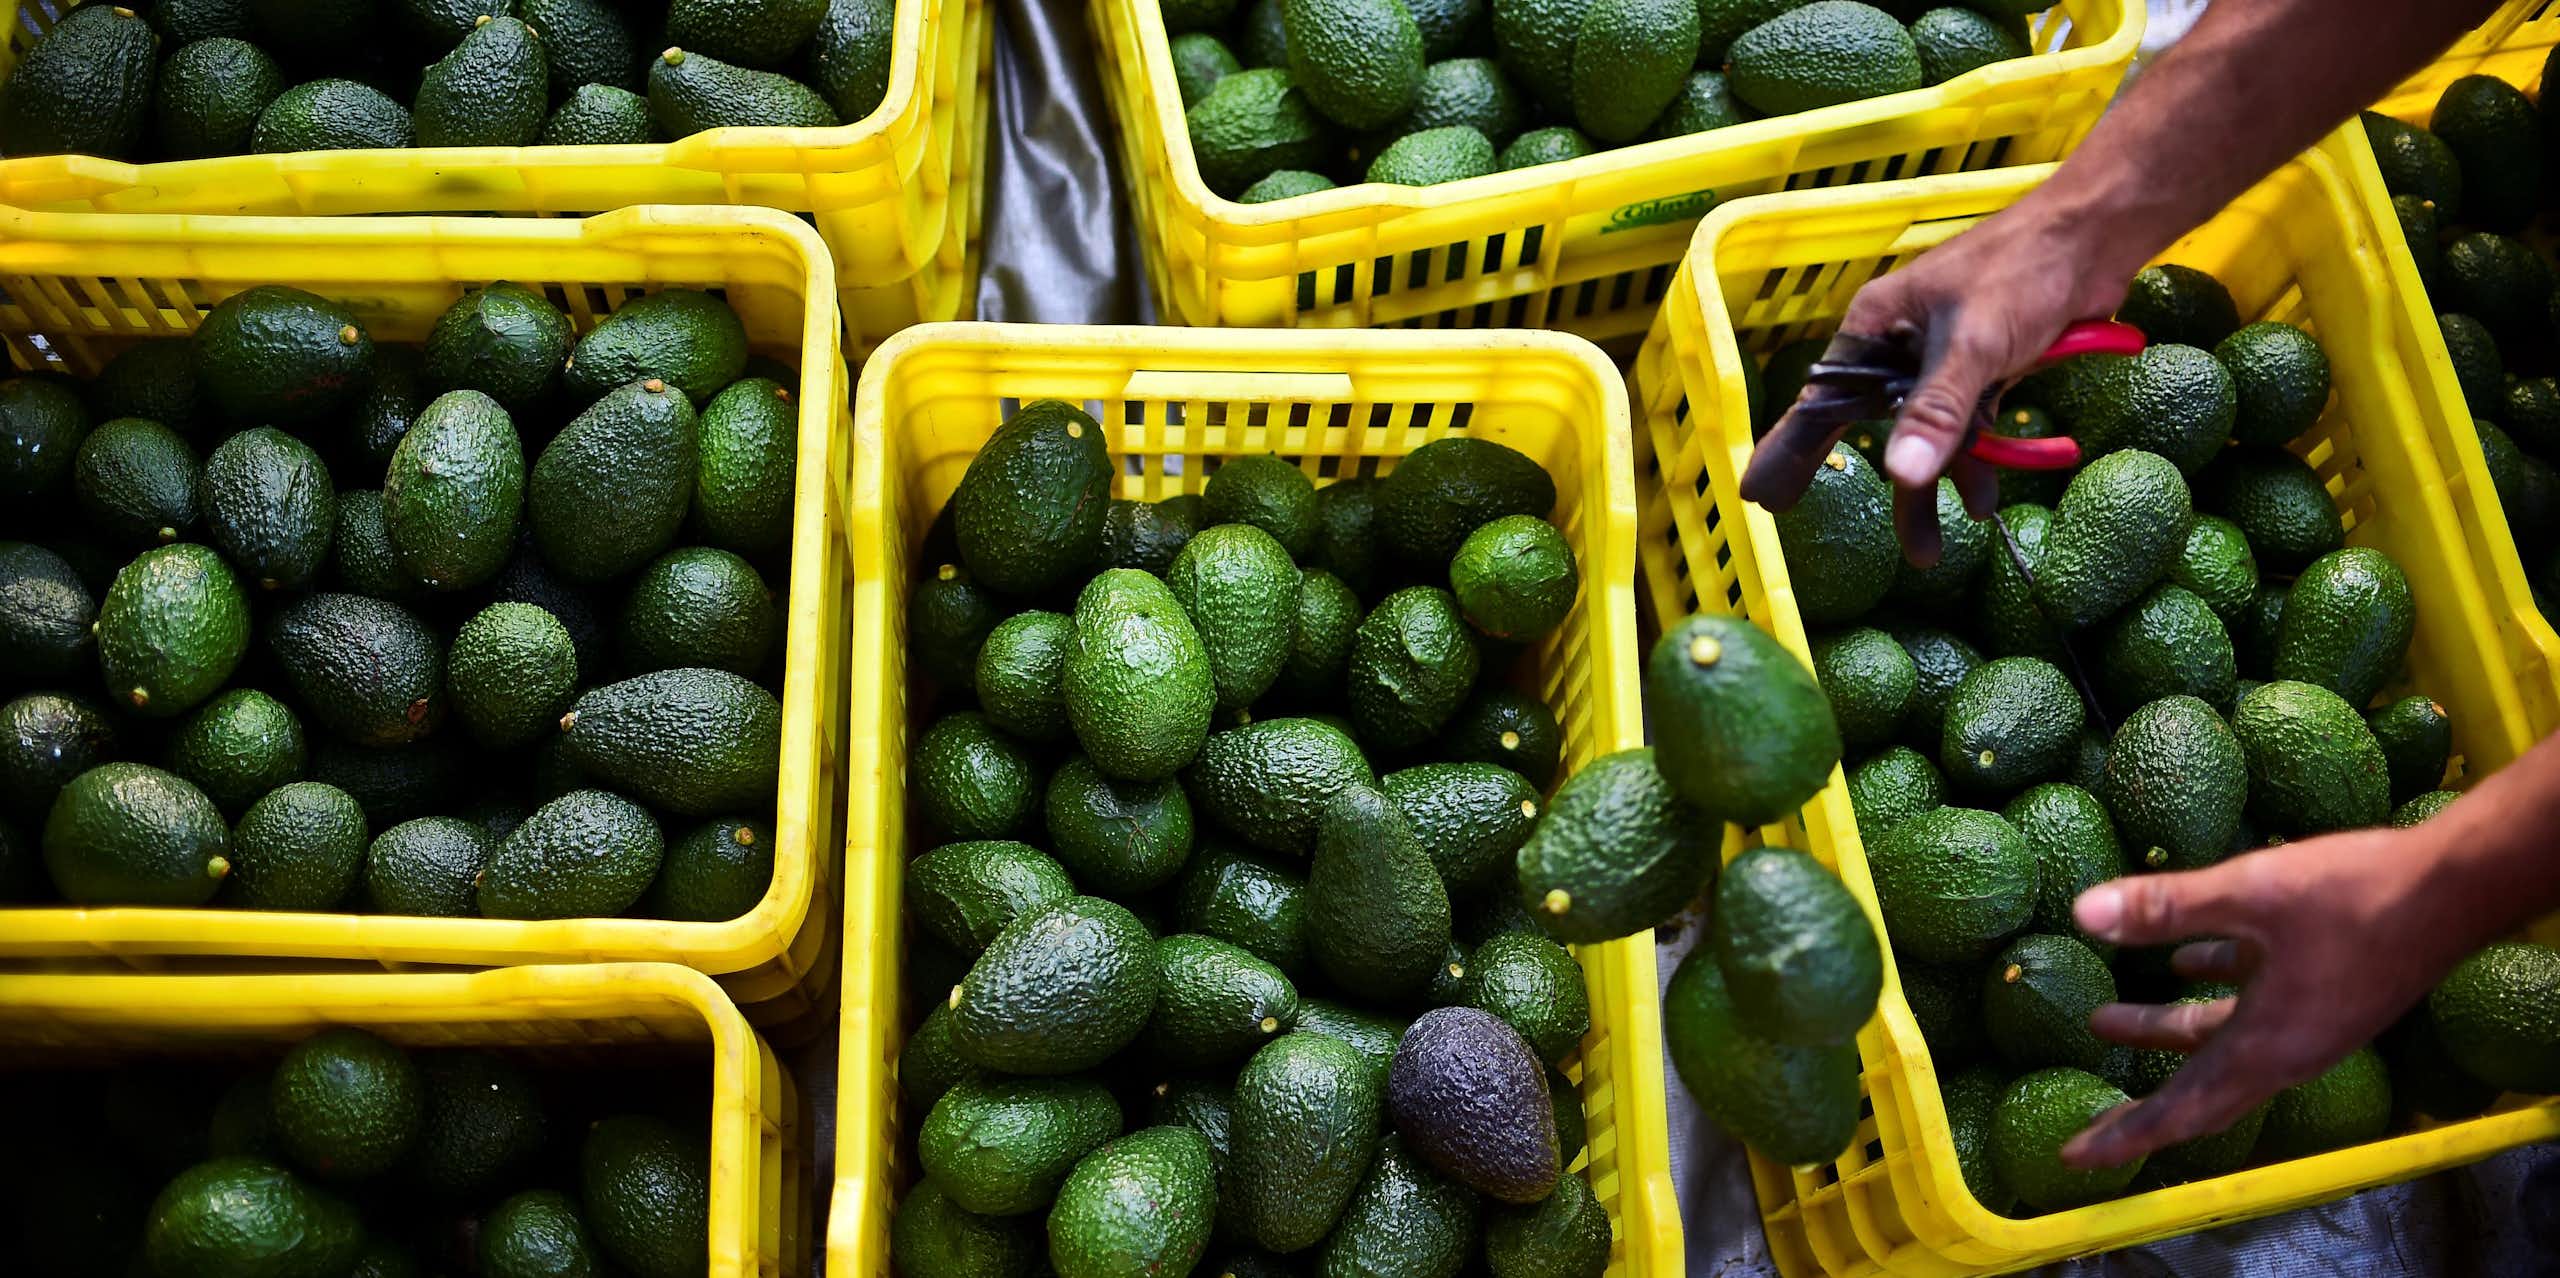 Hands drop Hass avocados  into plastic baskets